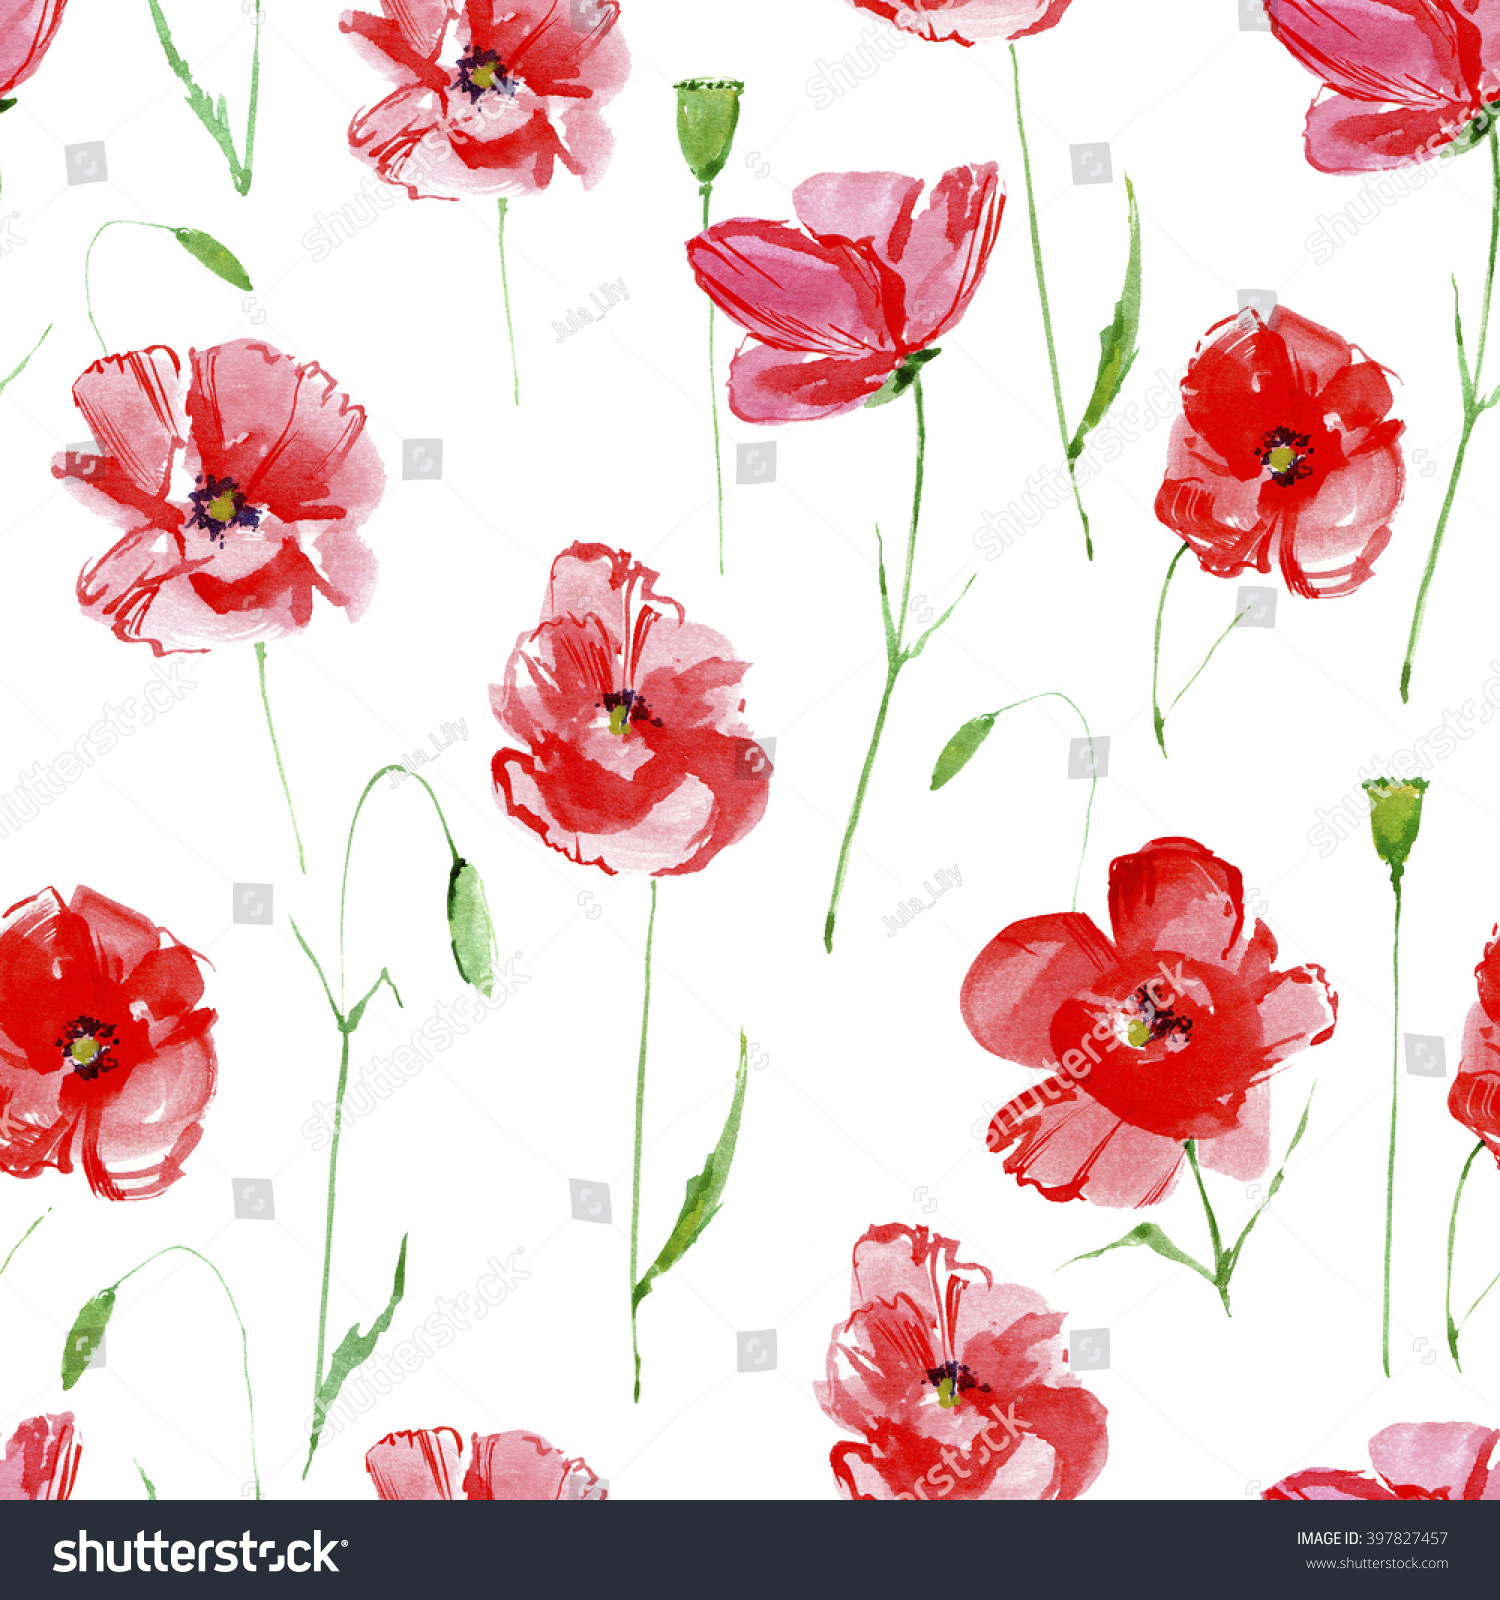 Edit Vectors Free Online - Poppy flowers | Shutterstock Editor